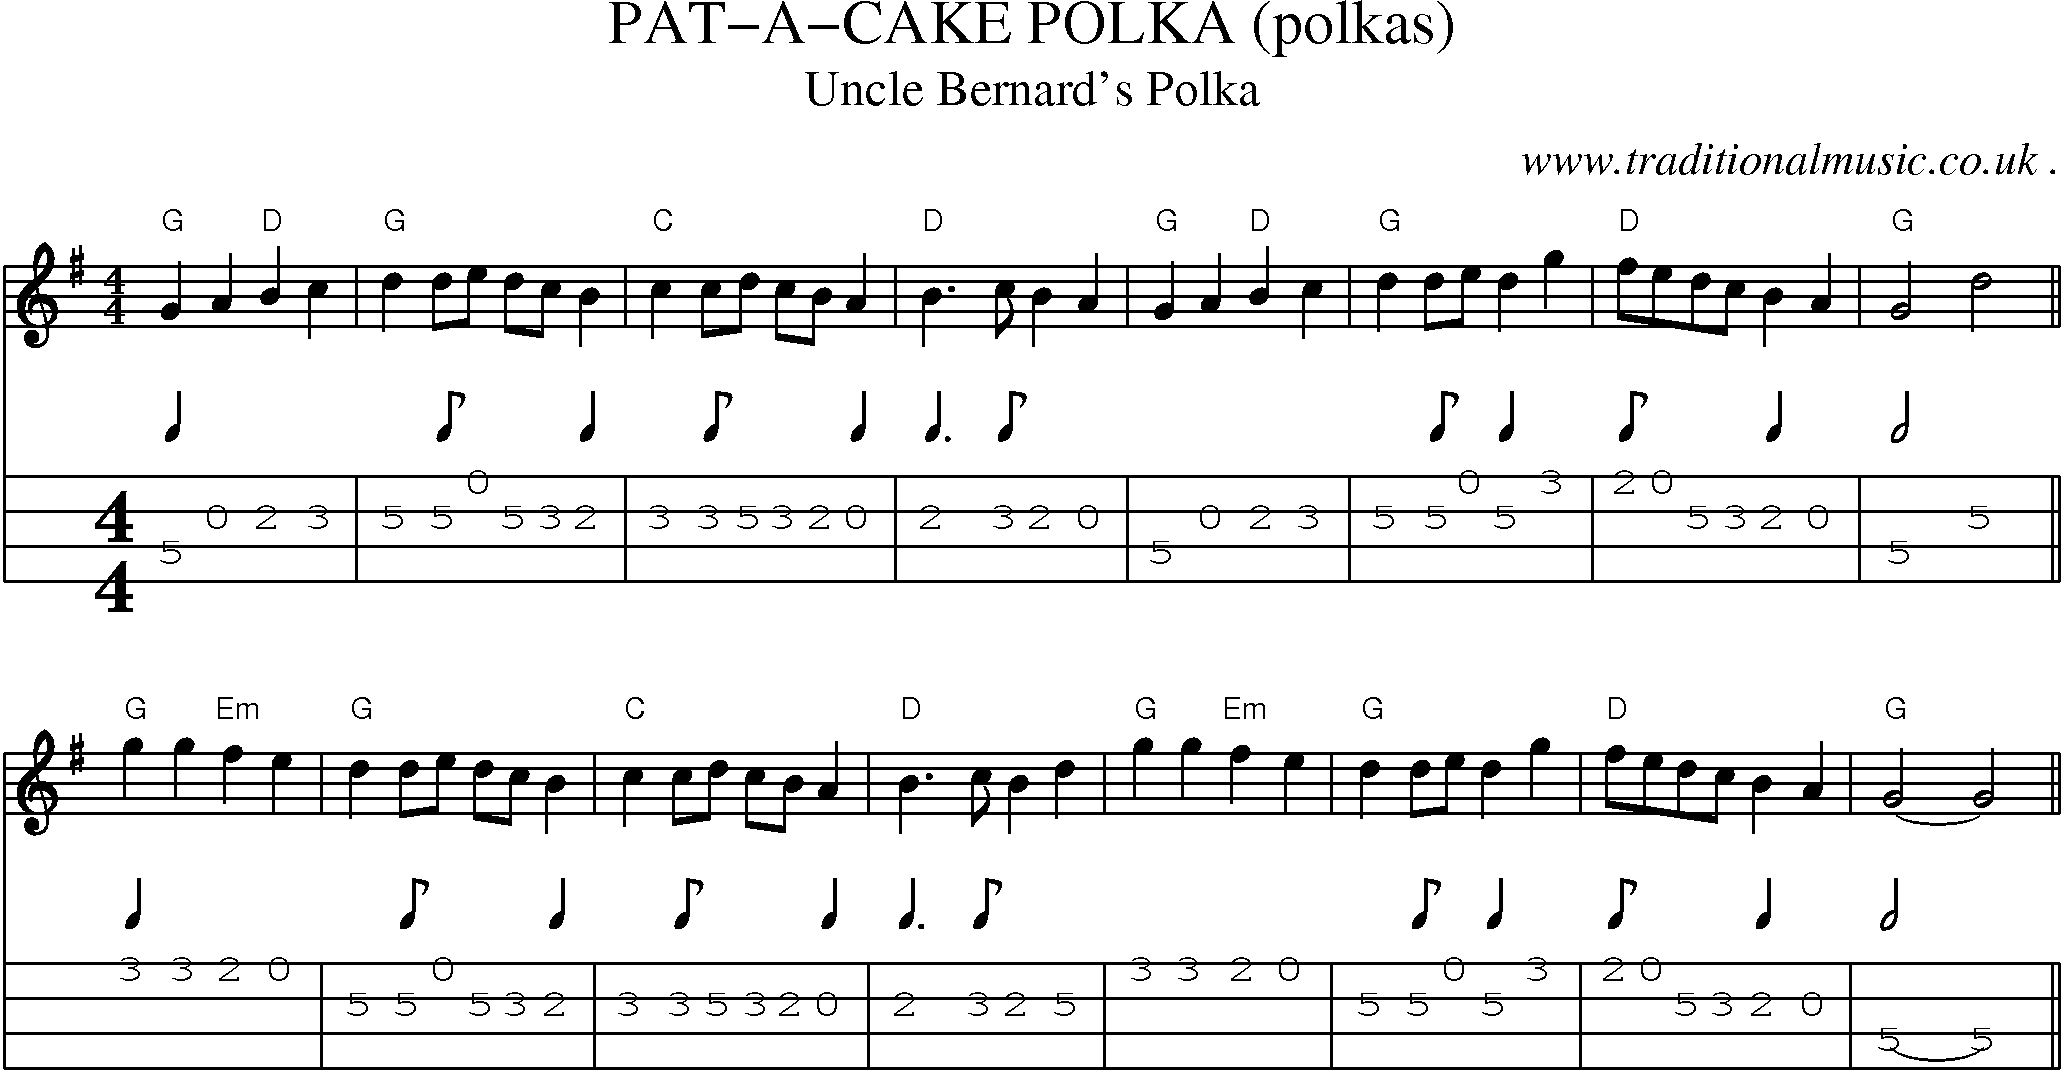 Music Score and Mandolin Tabs for Pat-a-cake Polka (polkas)